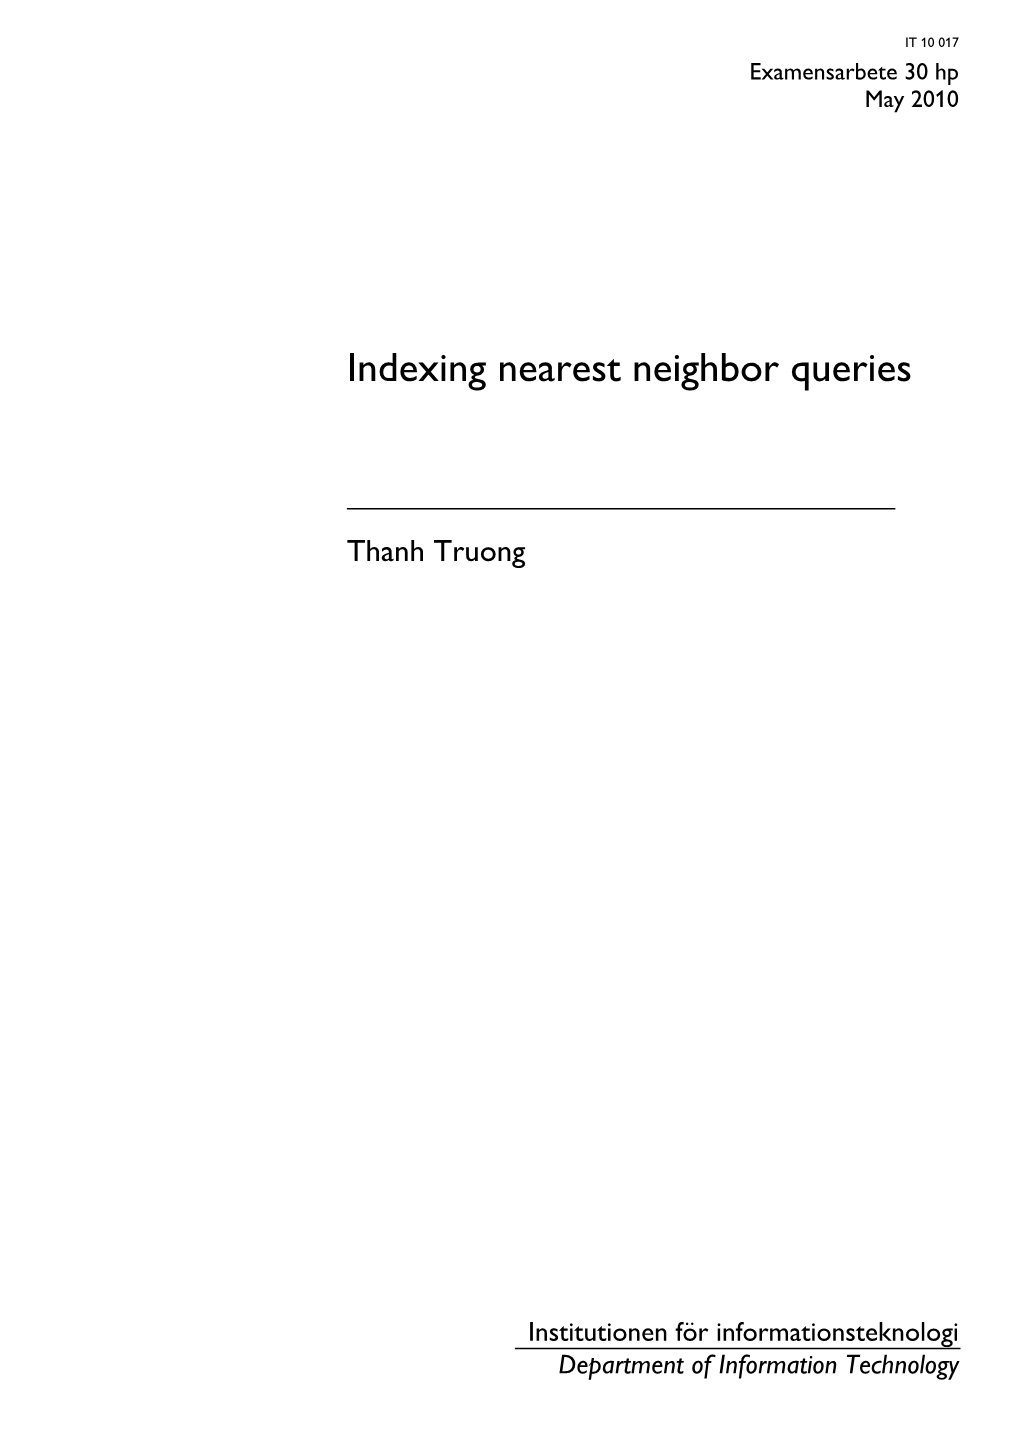 Indexing Nearest Neighbor Queries